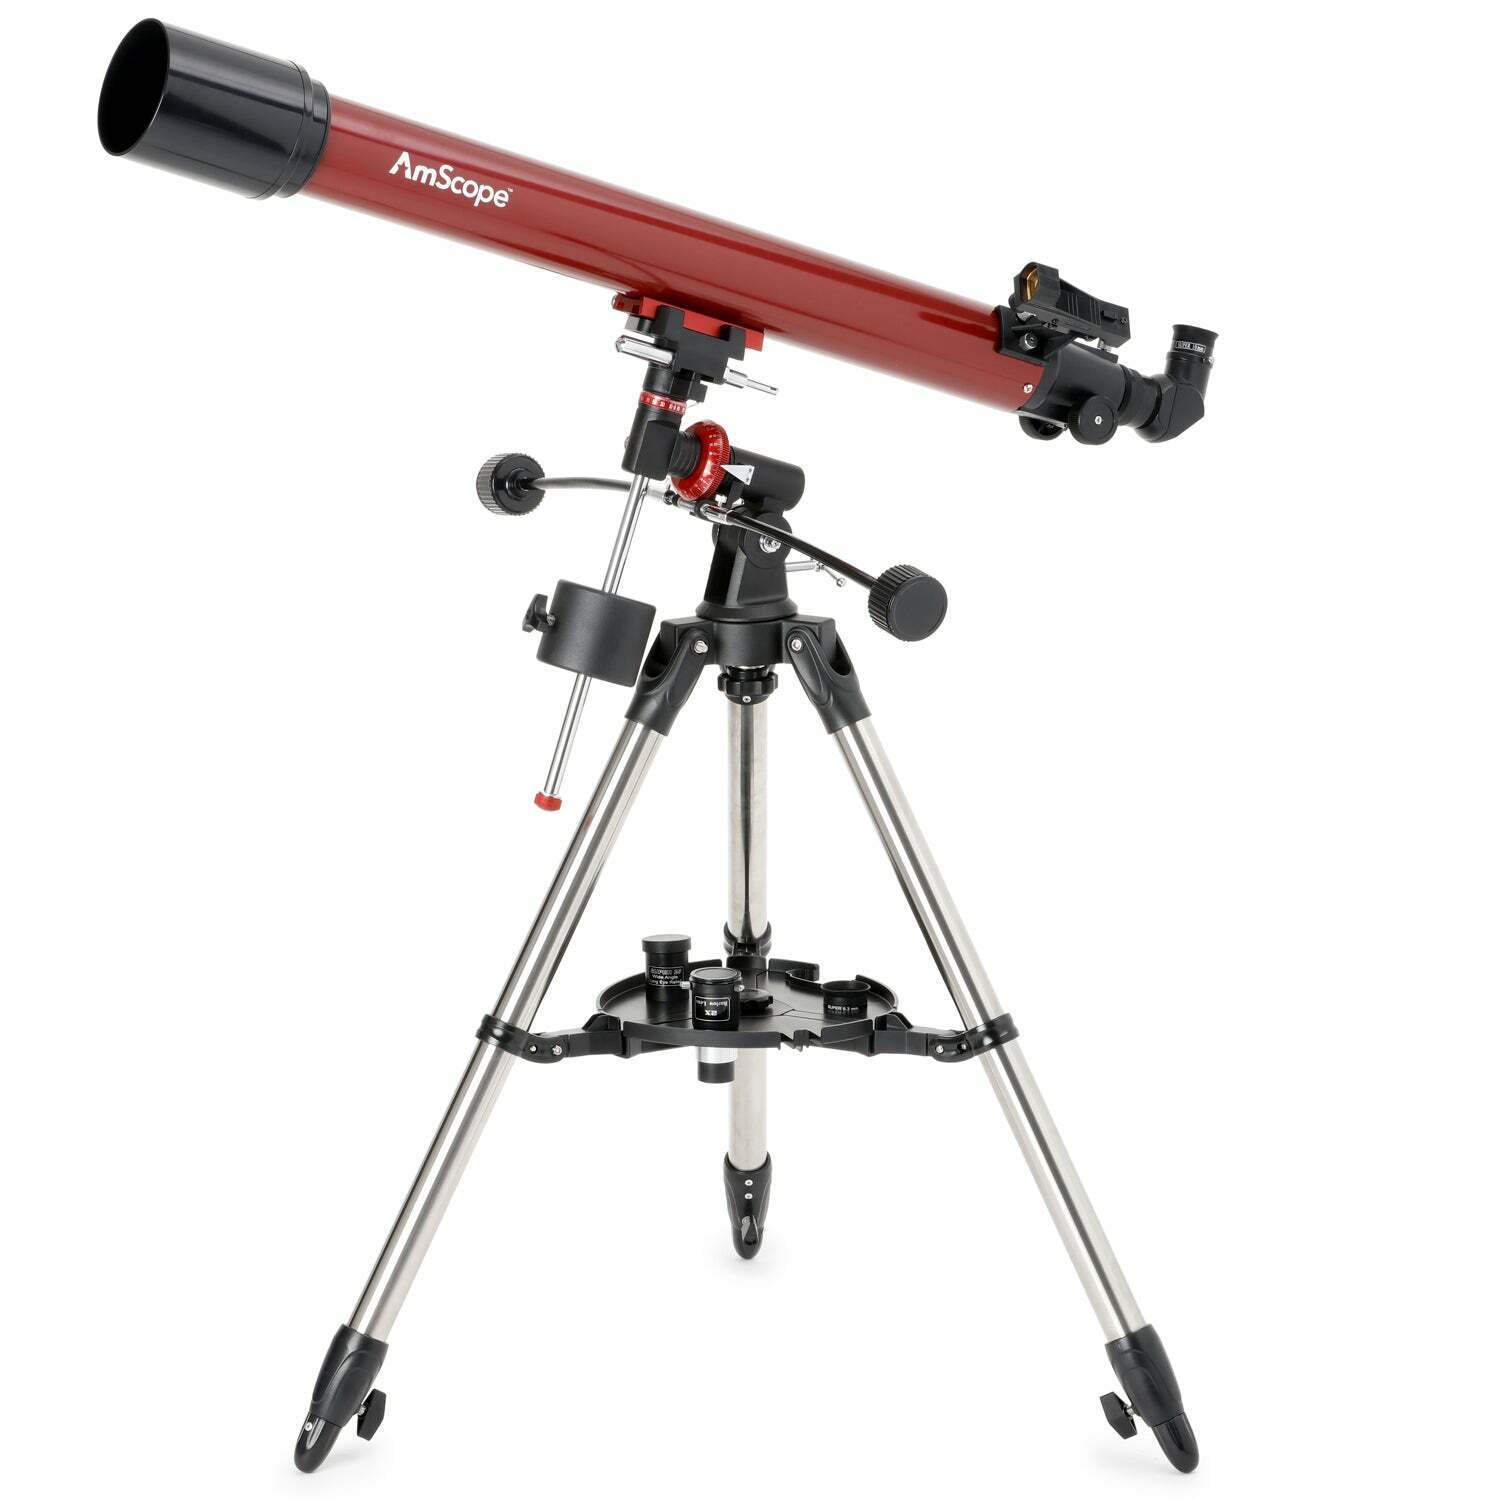 AmScope Refractor EQ Telescope 70mm Aperture, 900mm Focal Length +Red Dot Finder